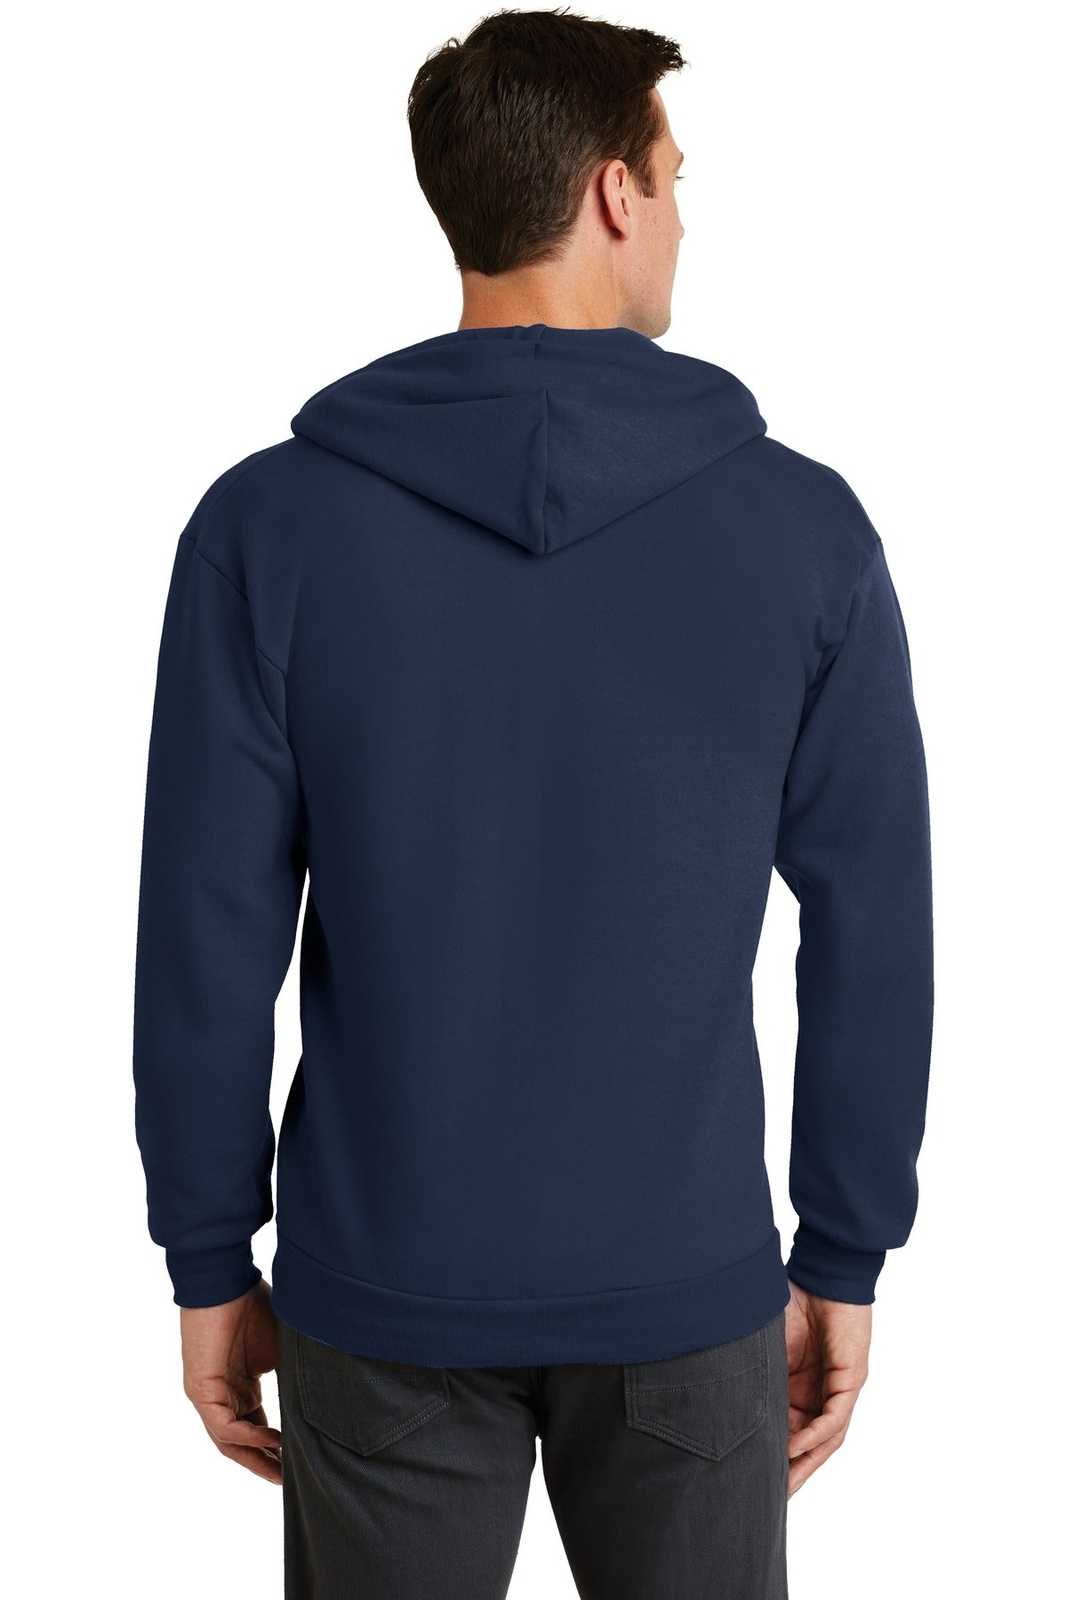 Port & Company PC78ZH Core Fleece Full-Zip Hooded Sweatshirt - Navy - HIT a Double - 1